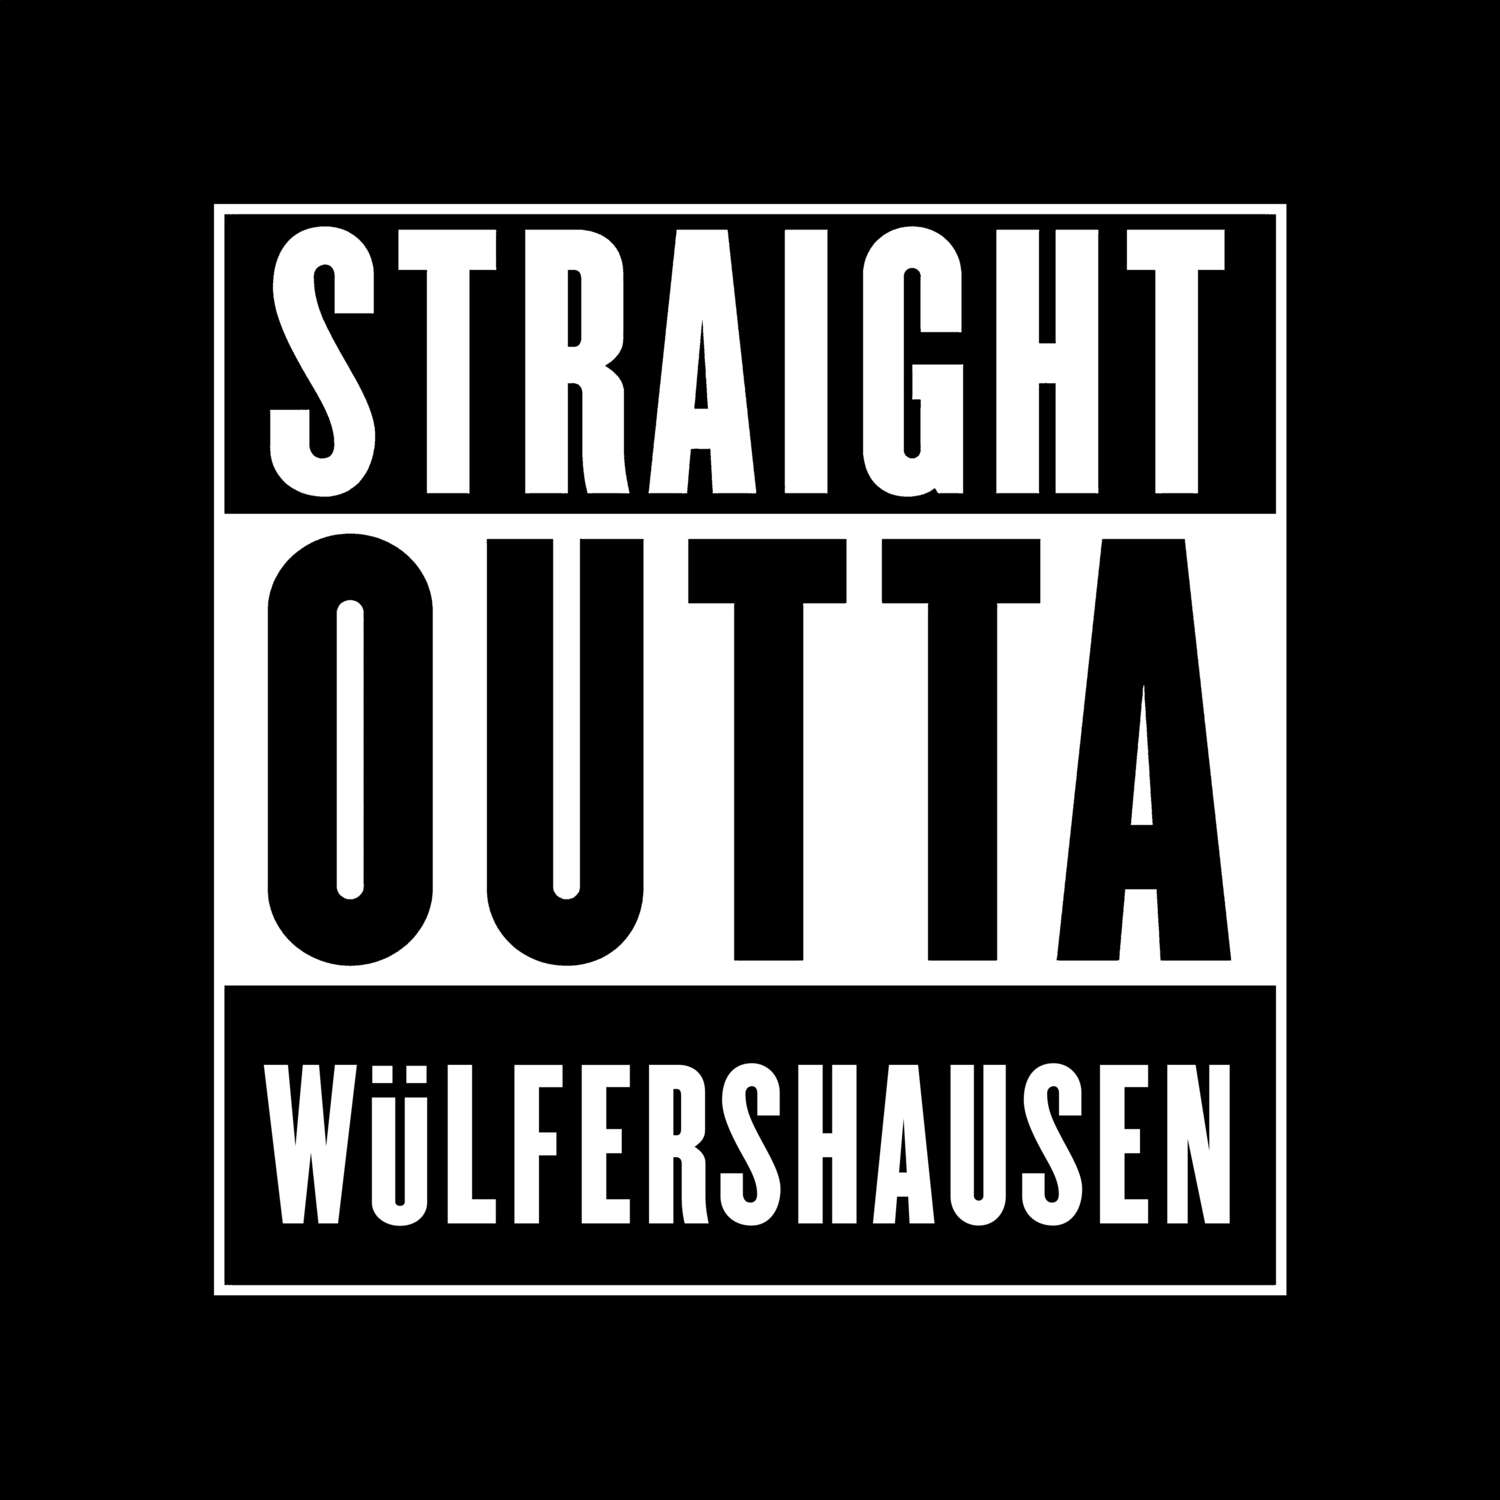 Wülfershausen T-Shirt »Straight Outta«